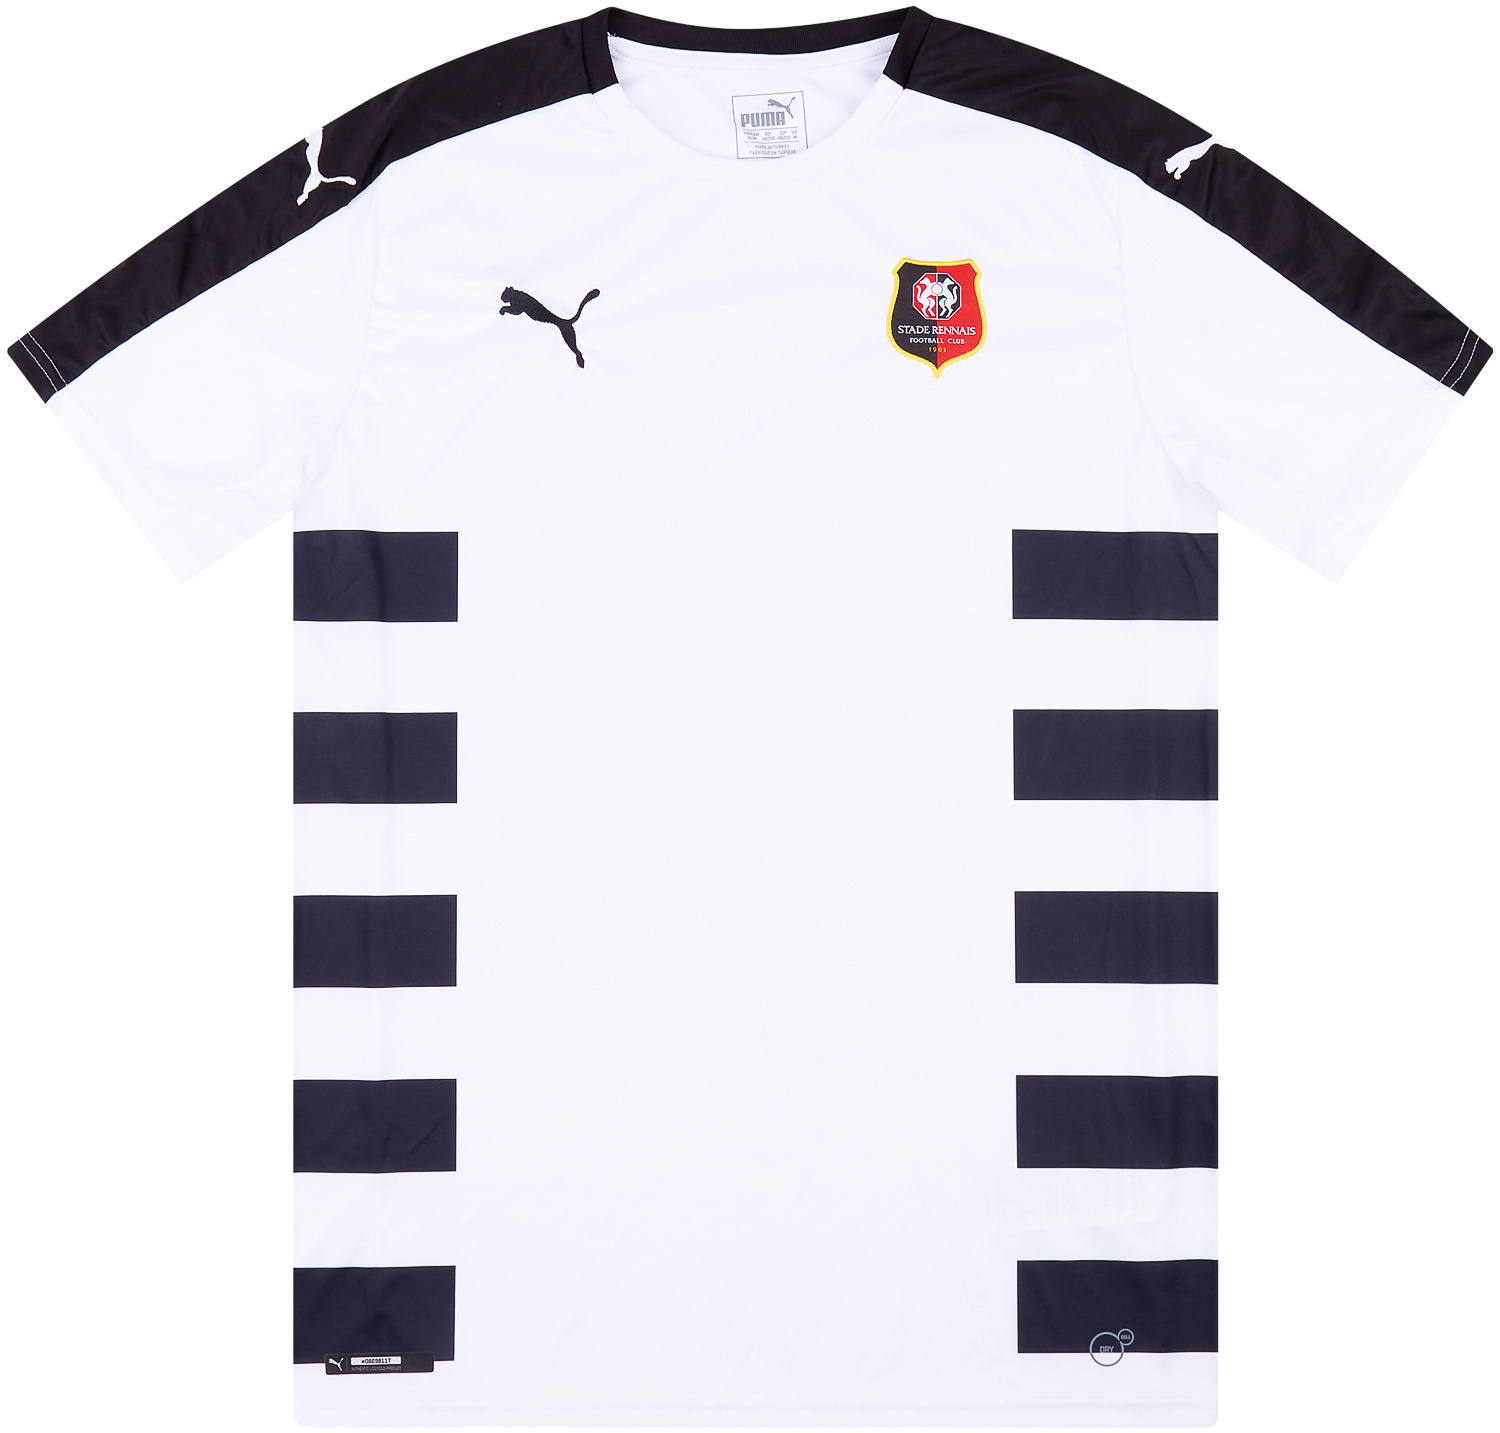 Retro Rennes Shirt